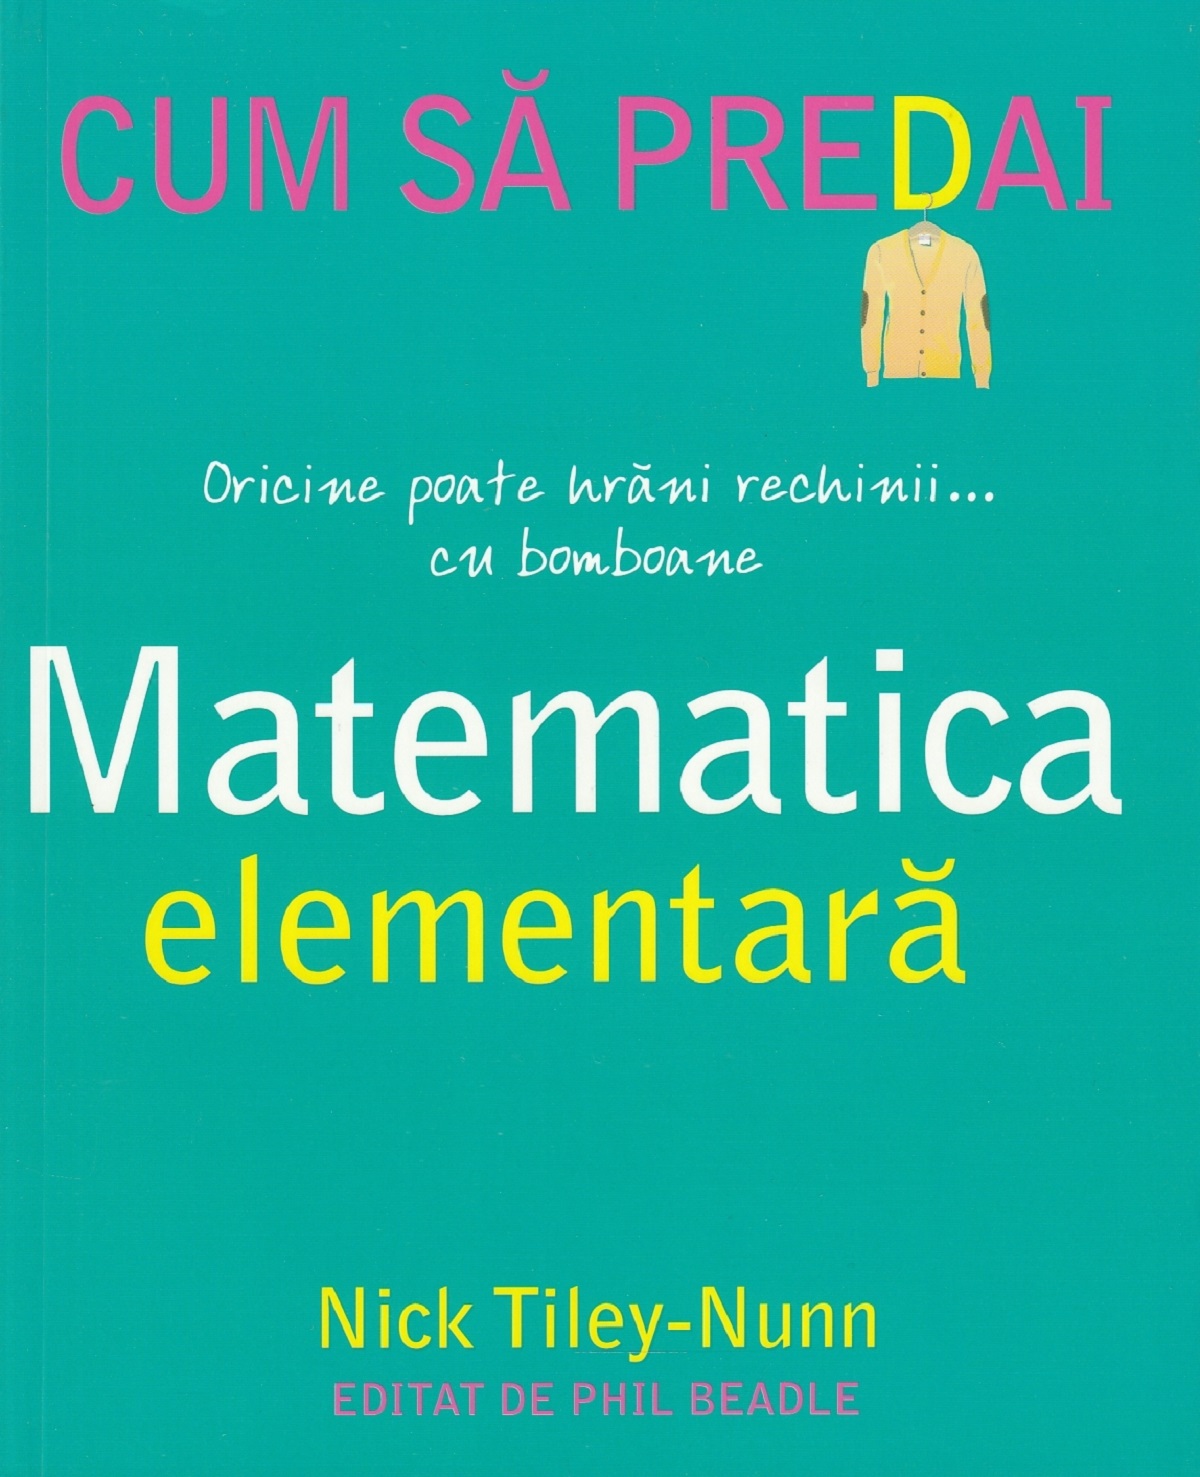 Cum sa predai matematica elementara - Nick Tiley-Nunn